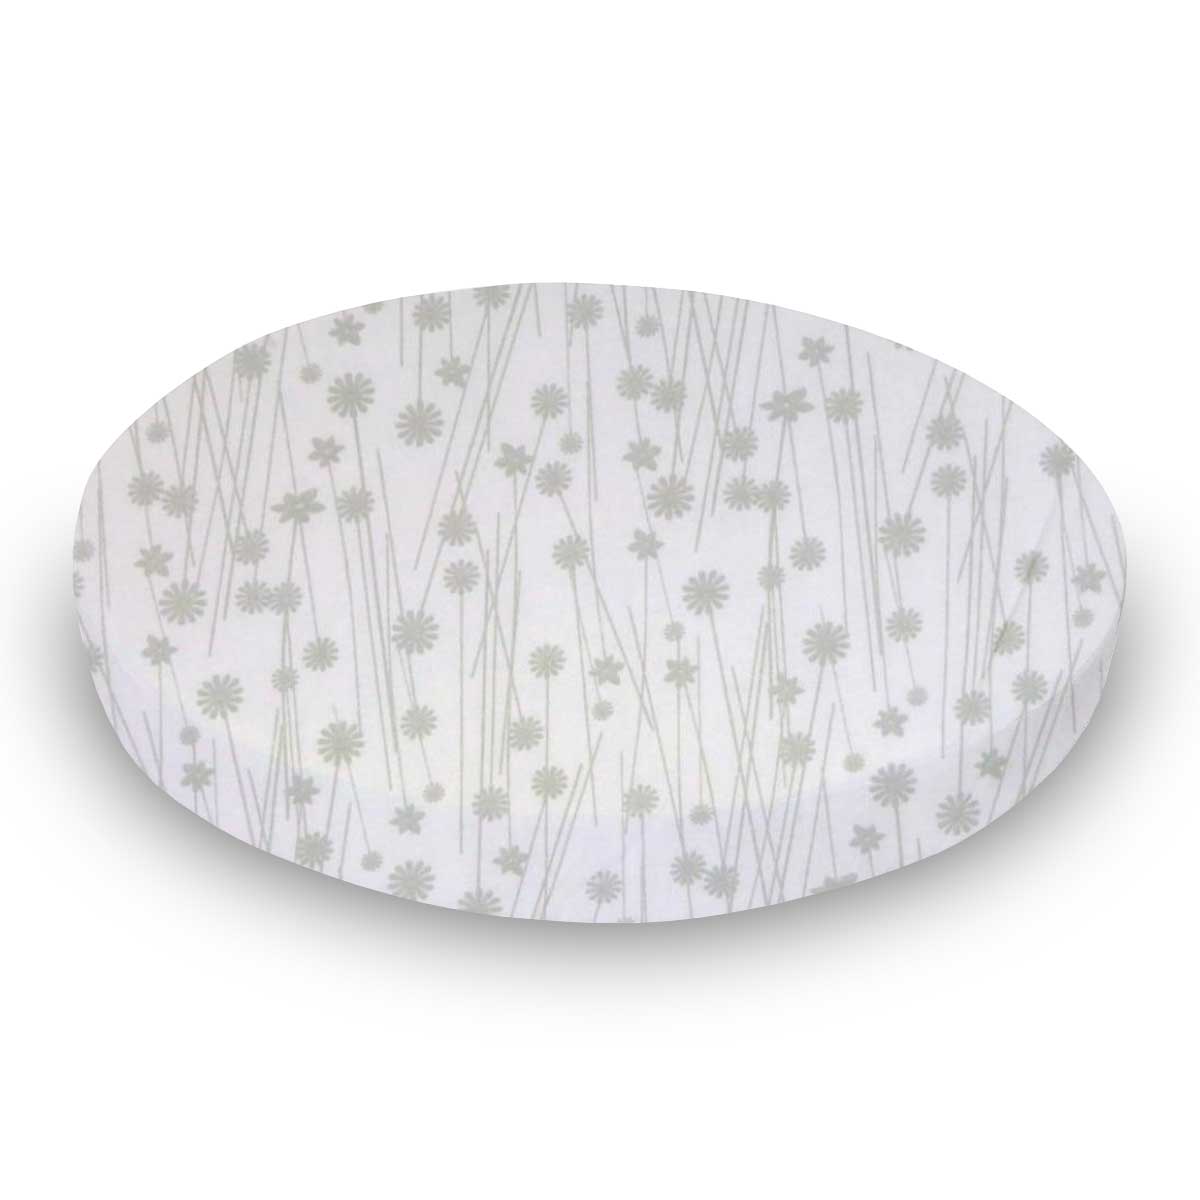 Oval Crib (Stokke Sleepi) - Grey Floral Stems - Fitted  Oval